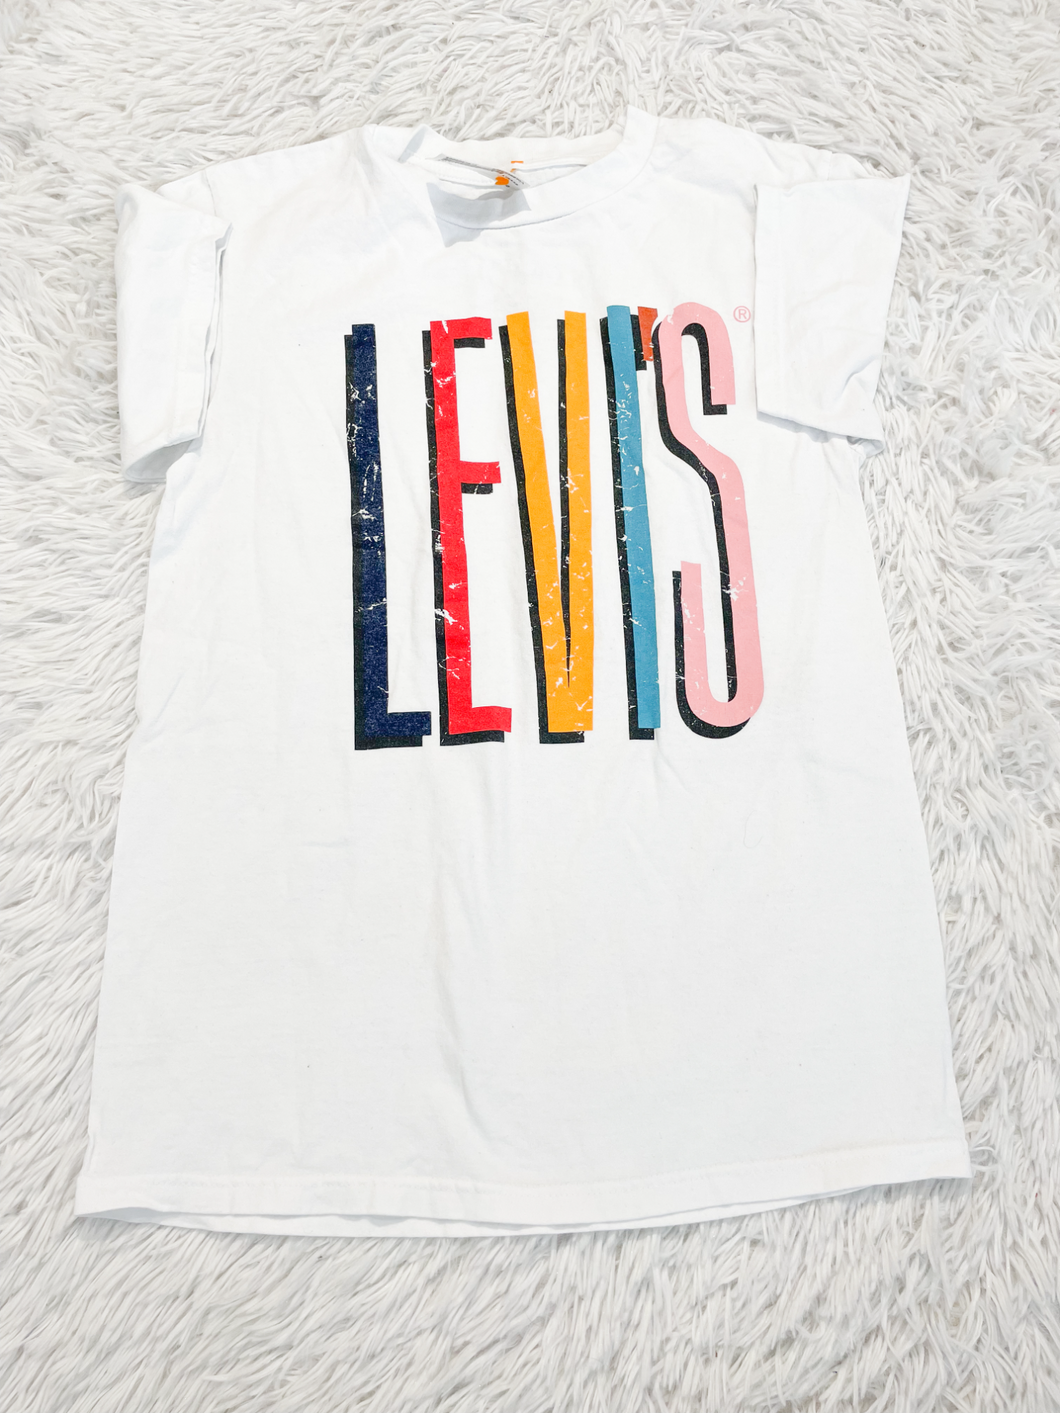 Levi T-shirt Size Small *